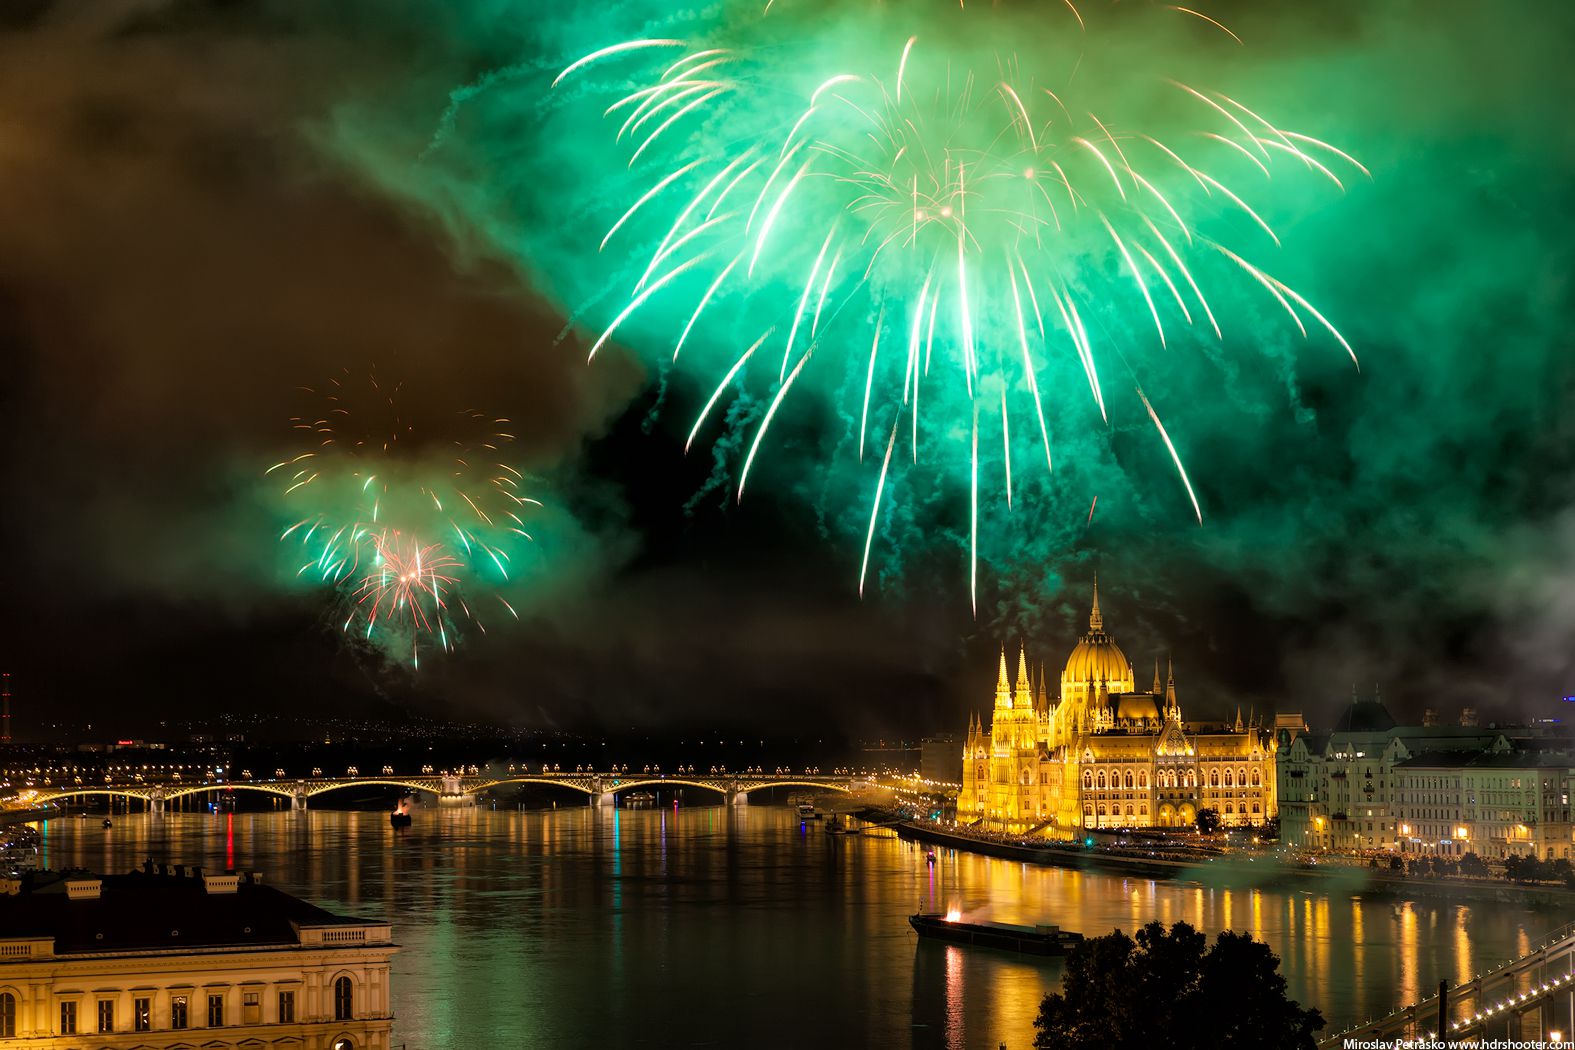 Green fireworks over Budapest, Hungary HDRshooter